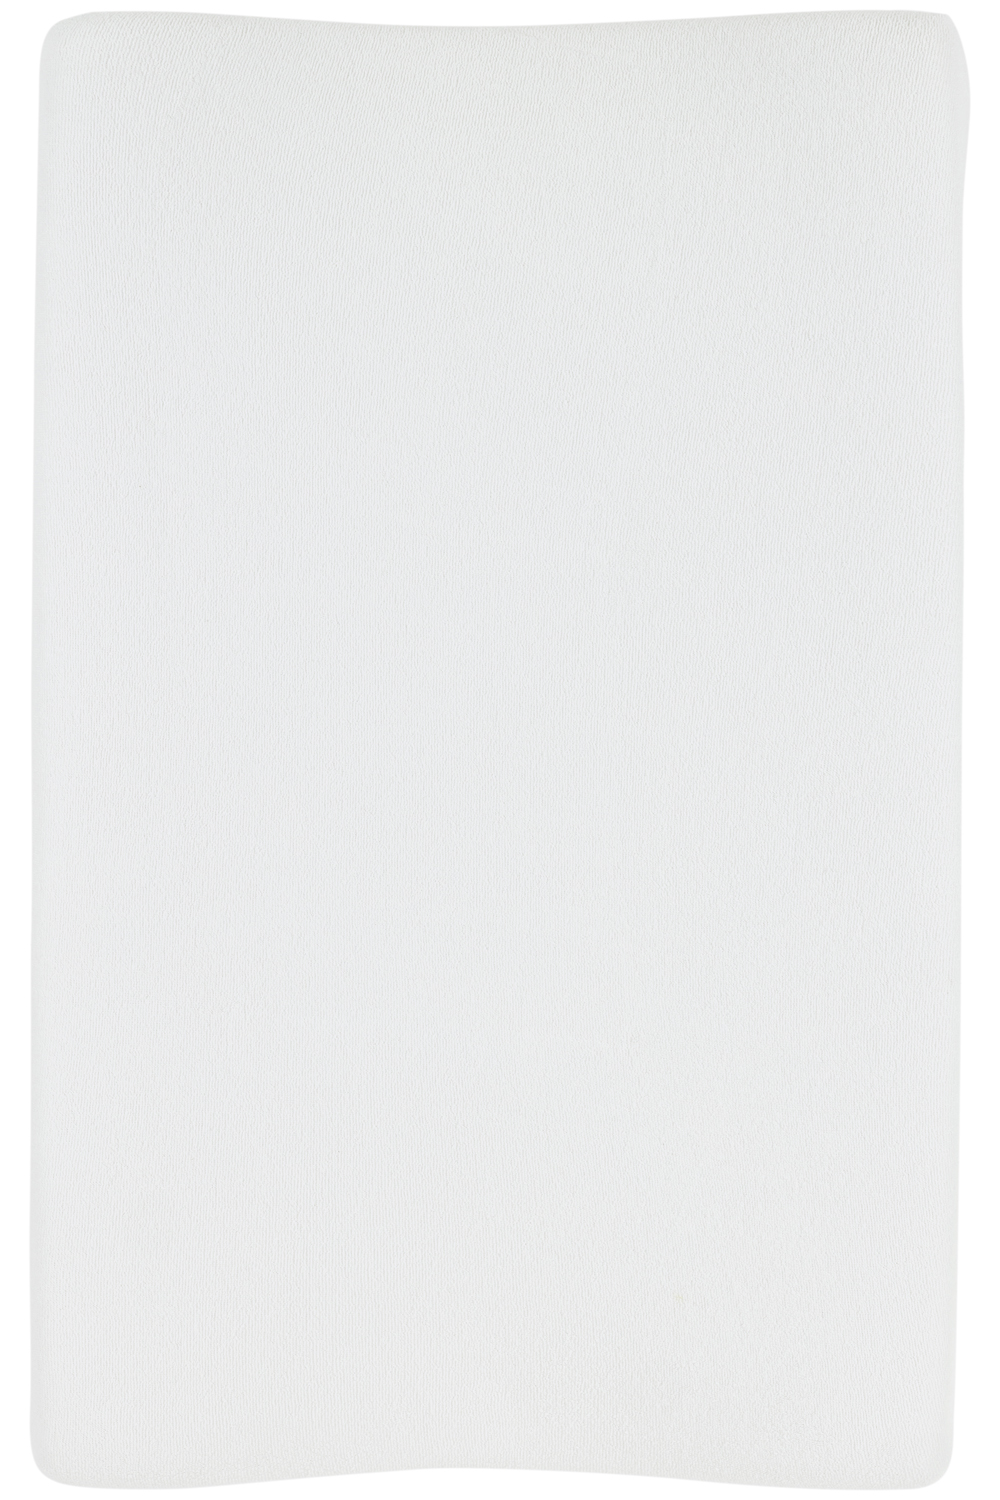 Wickelauflagenbezug frottee Uni - white - 50x70cm